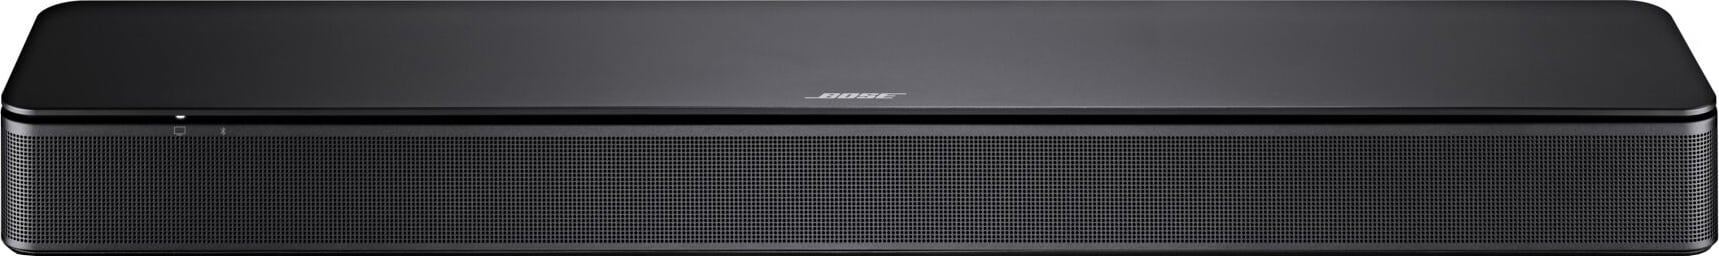 Bose TV Speaker Soundbar | Elgiganten